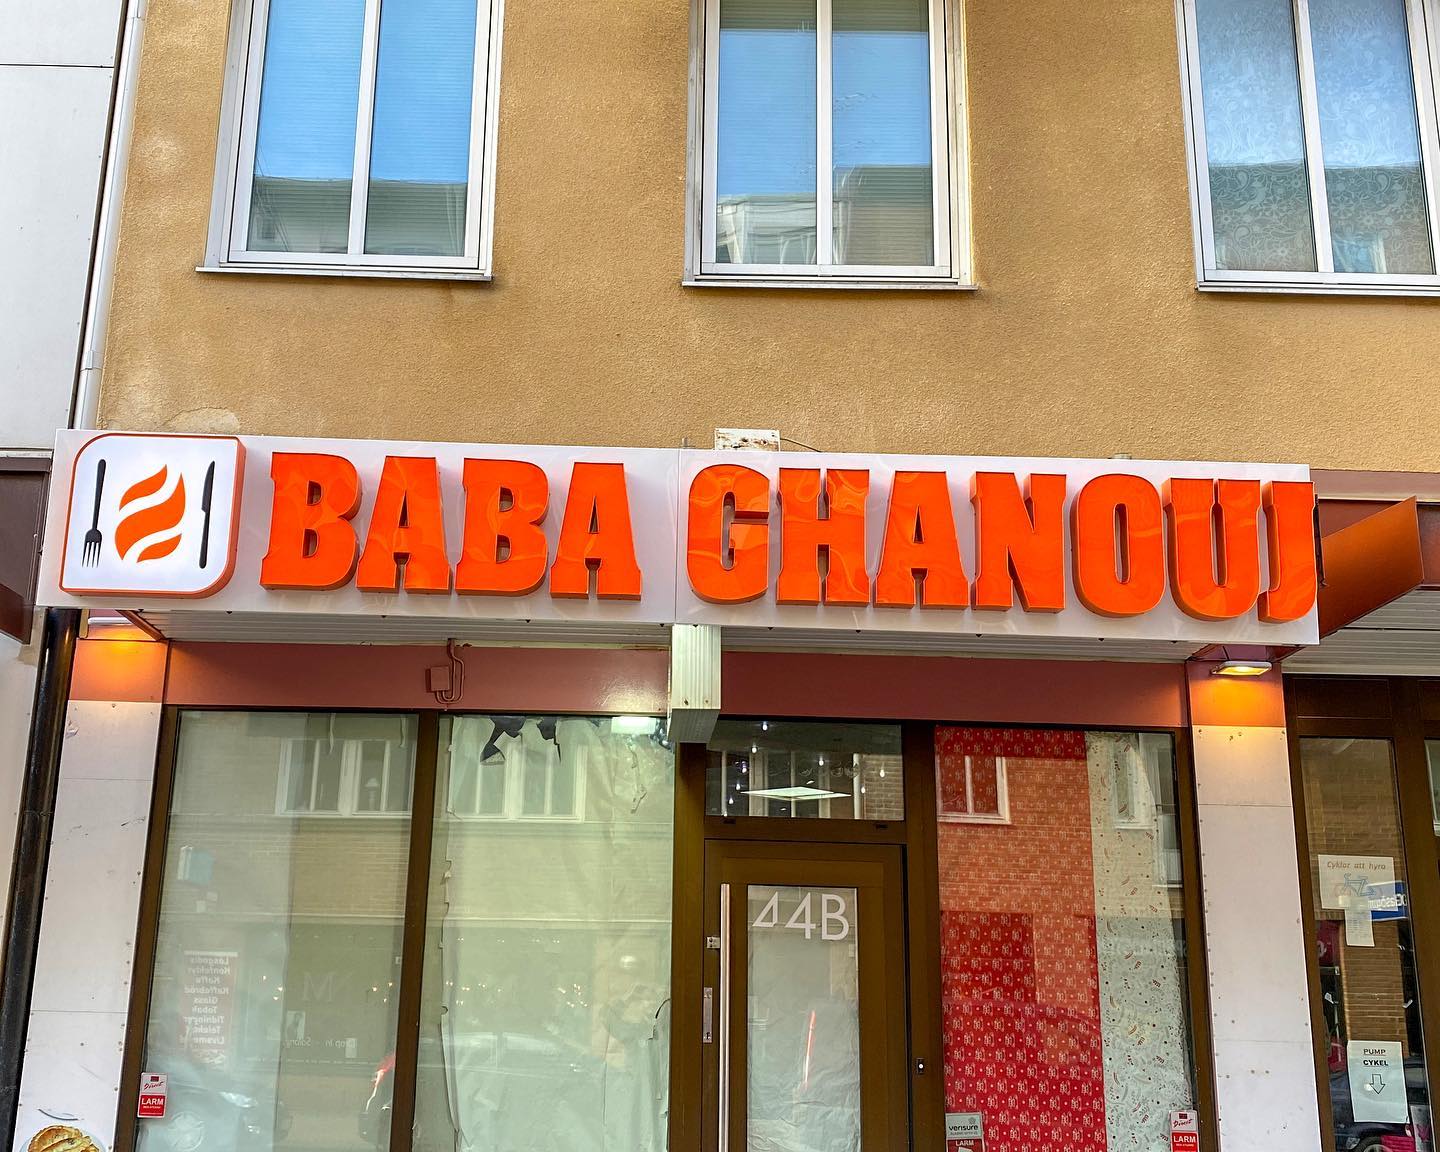 Baba Ghanouj